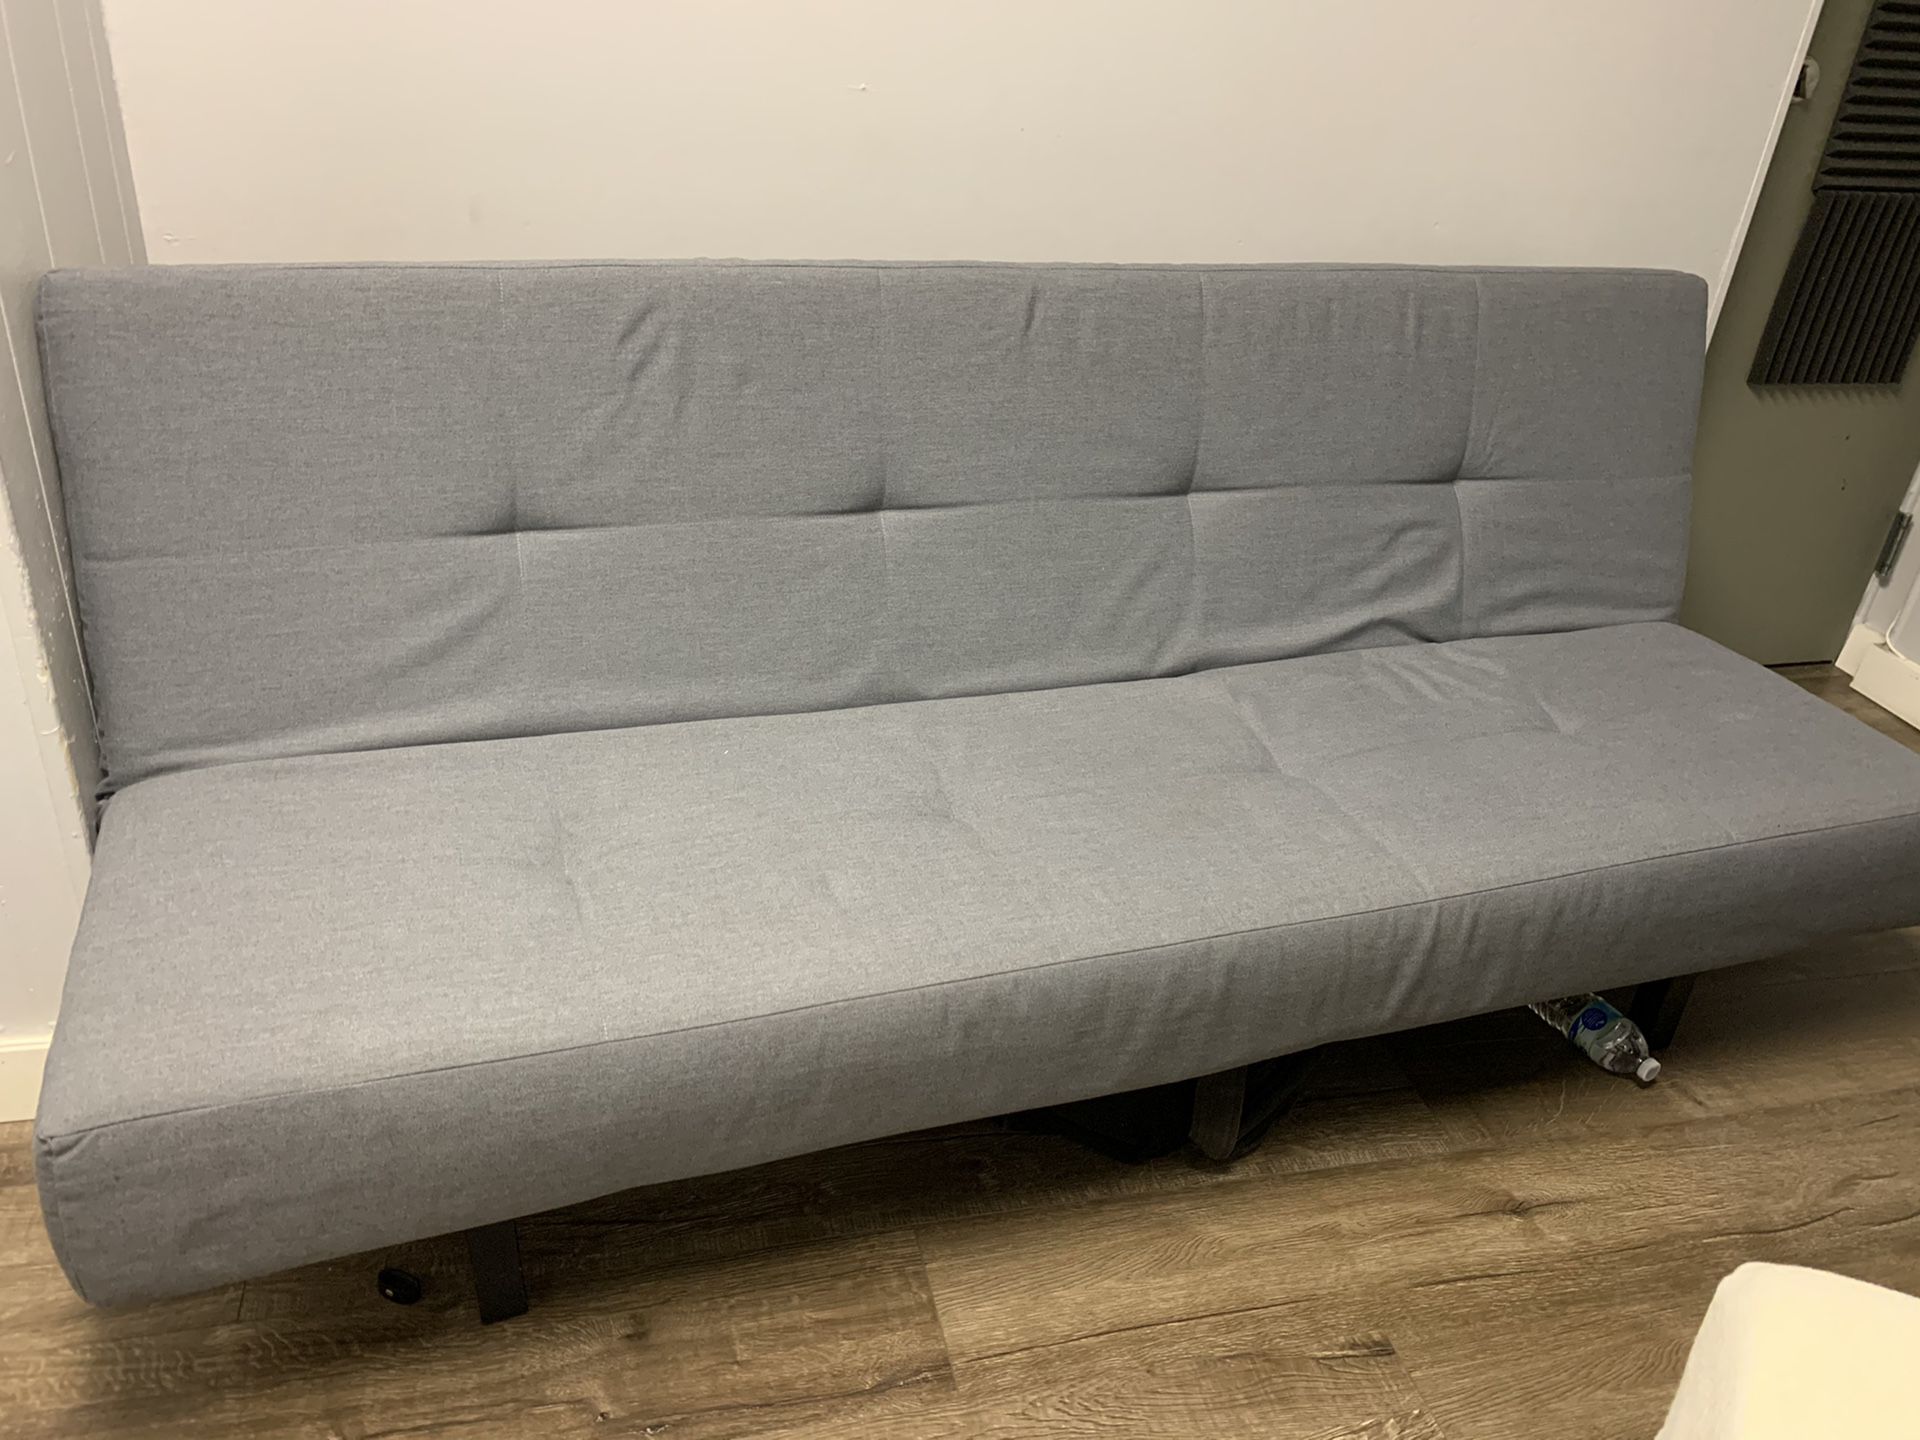 IKEA futon excellent condition